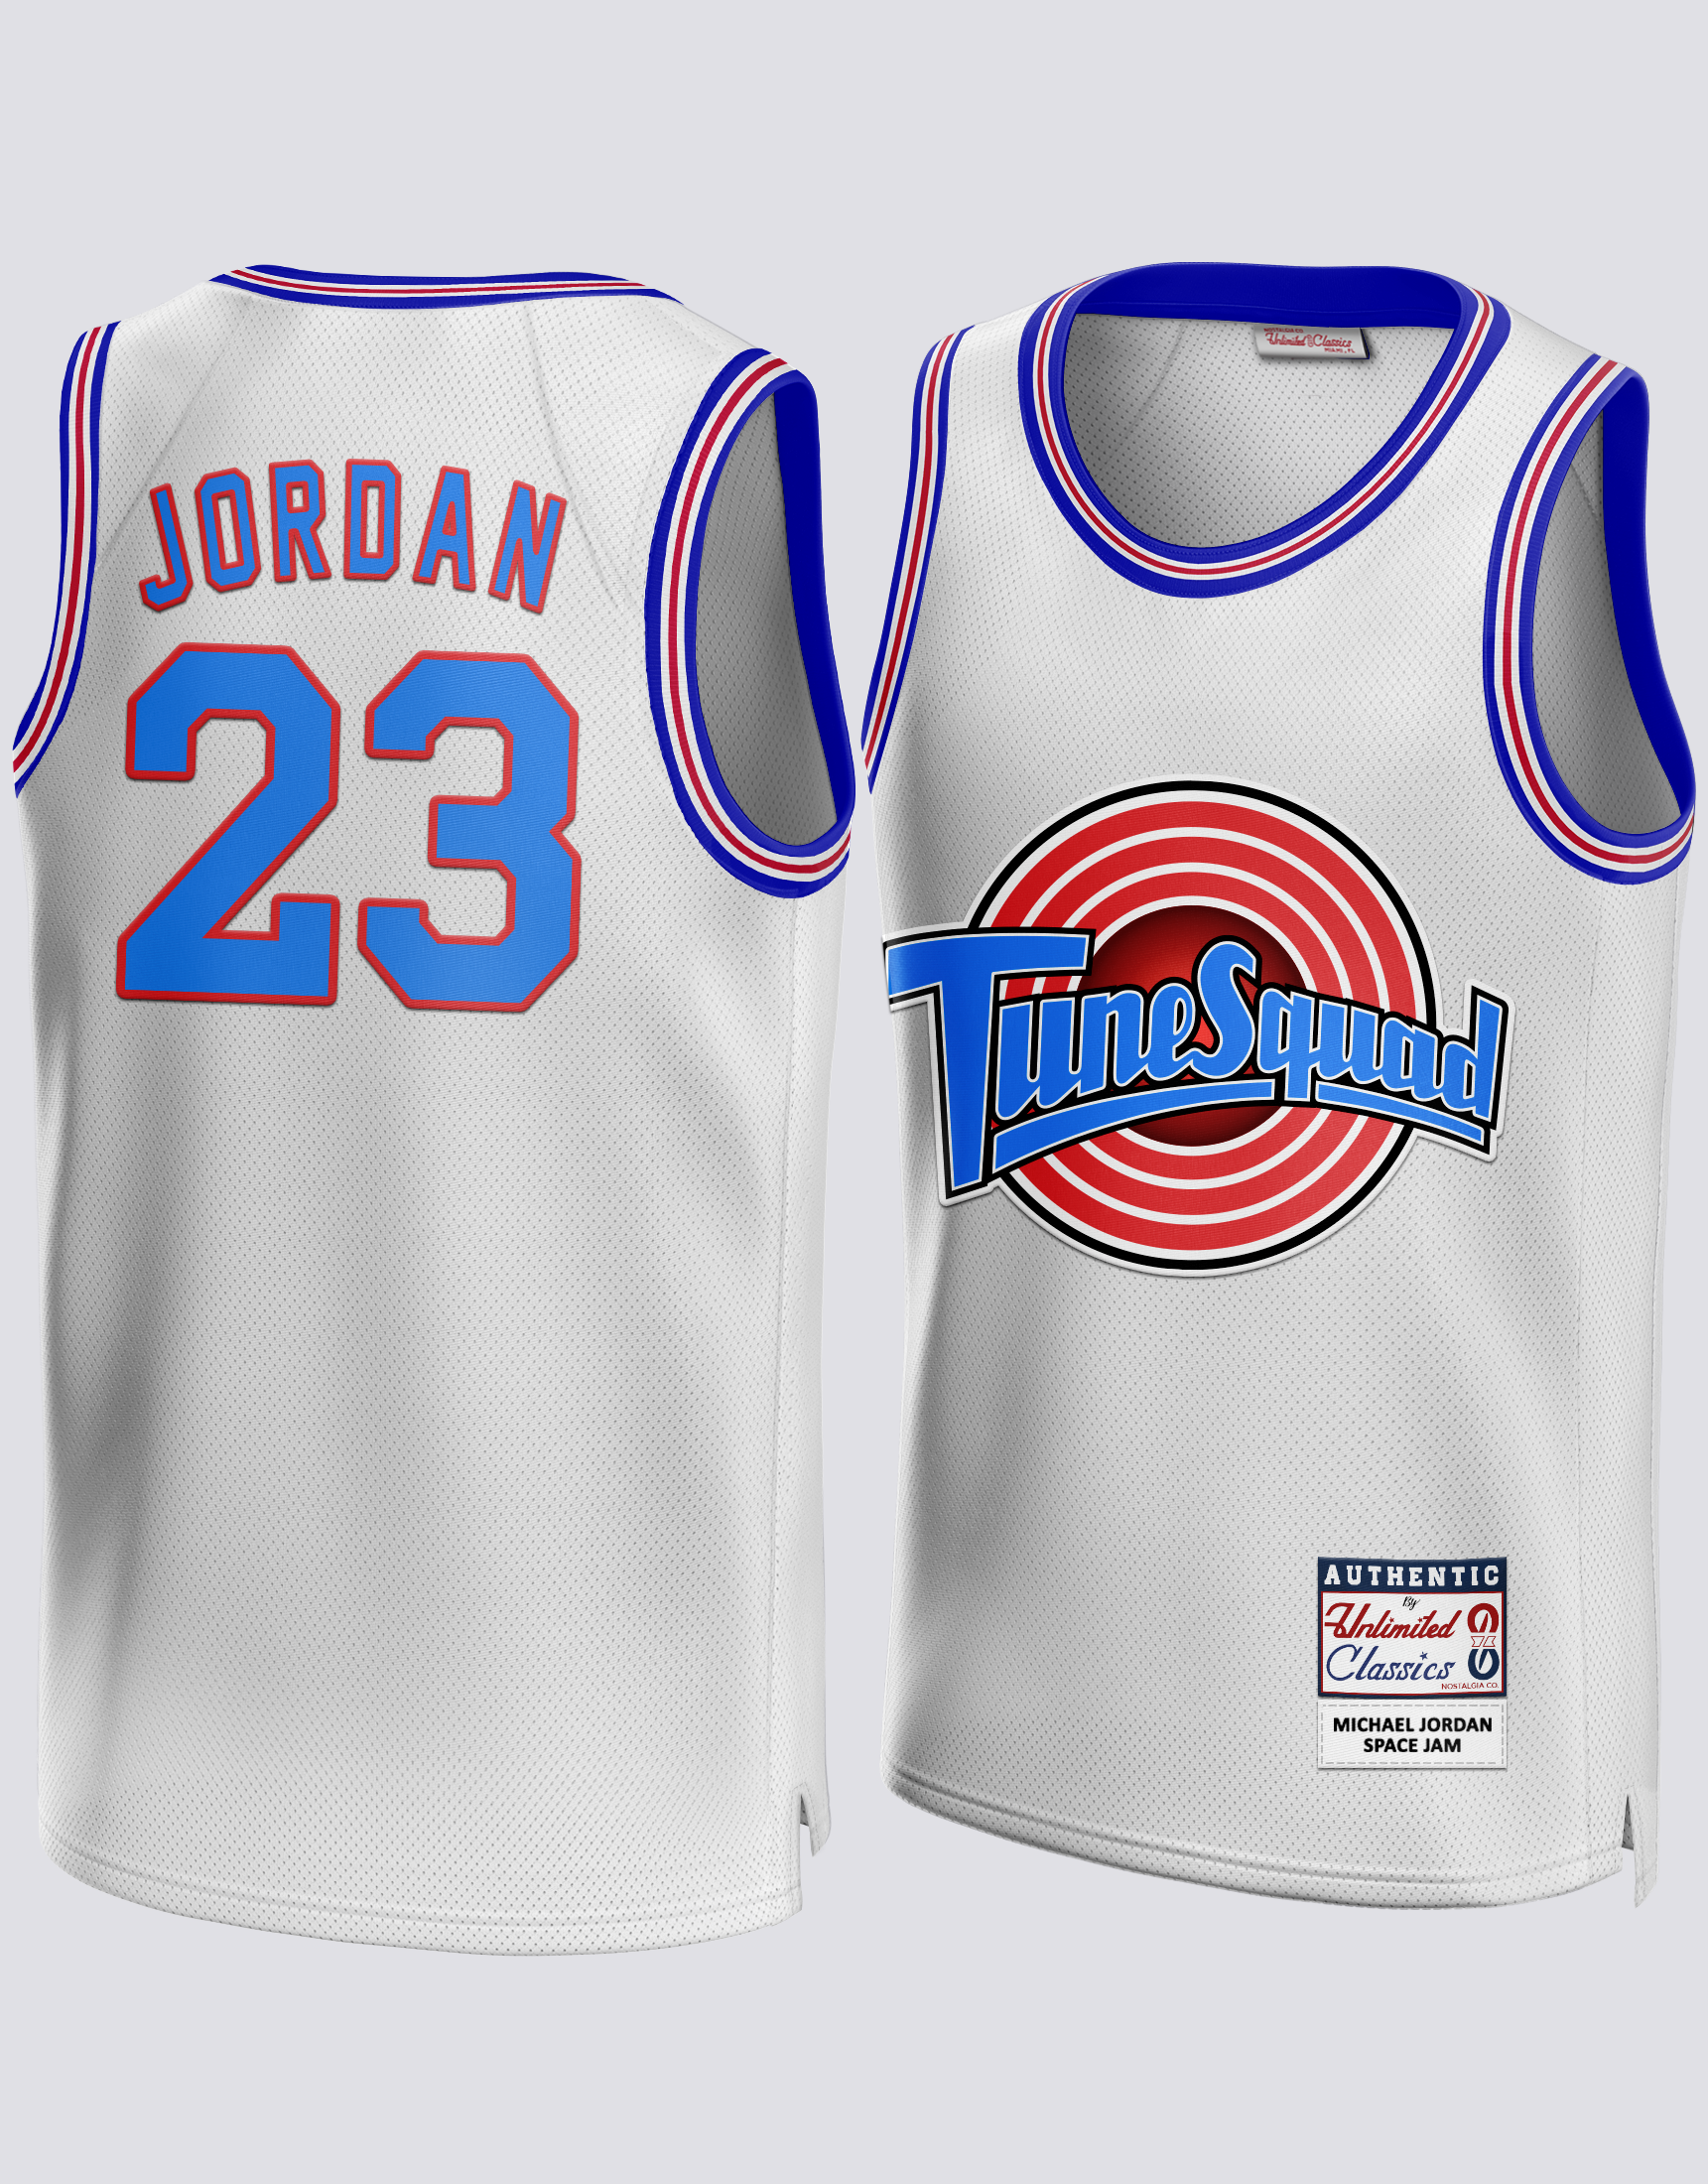 Jordan 23 Space Jam Tune Squad Basketball Jersey – Space Jam Tune Squad